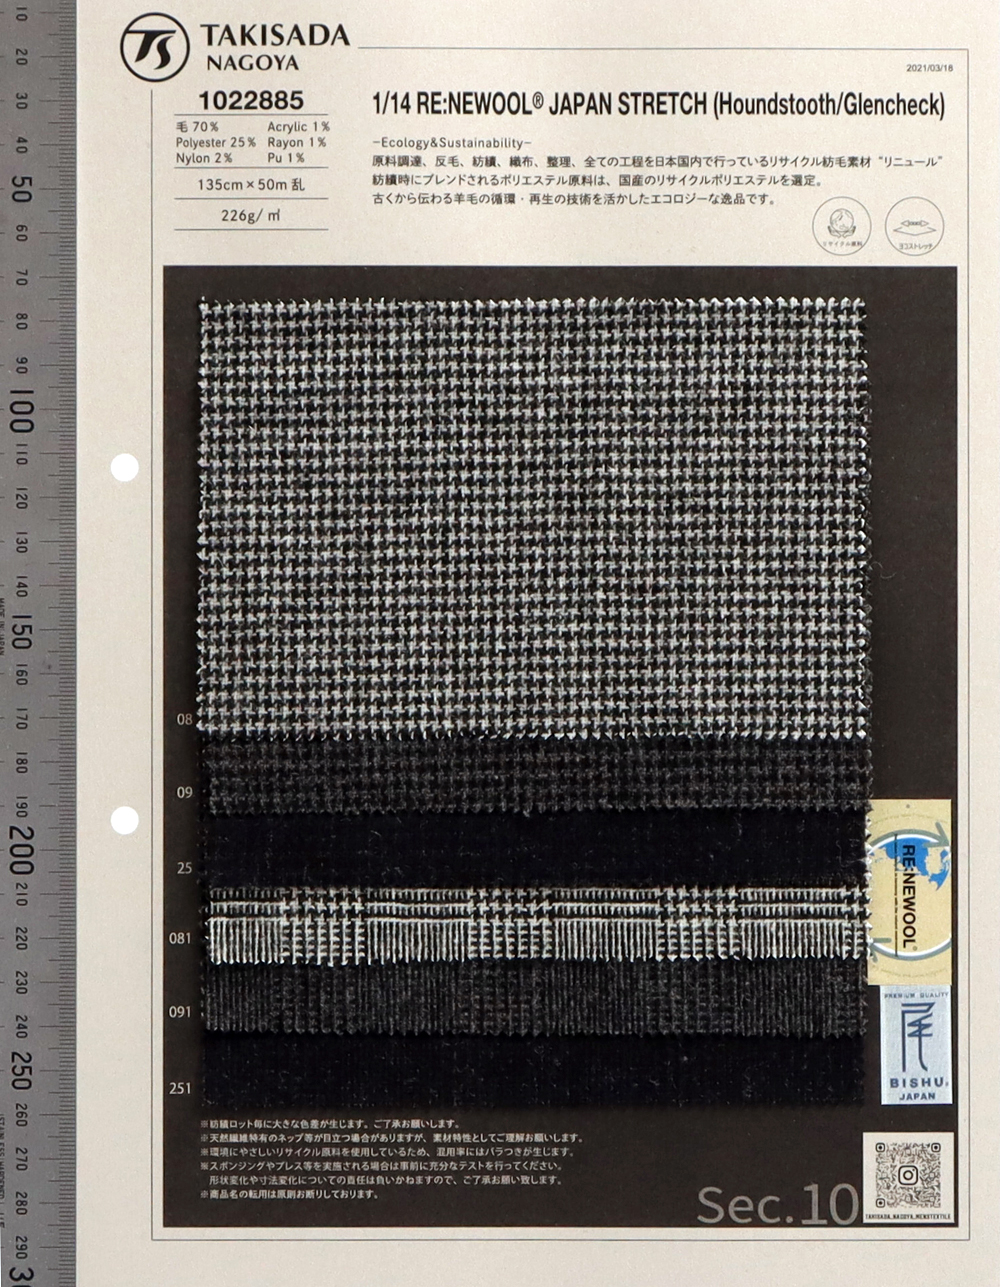 1022885 RE:NEWOOL® JAPAN Stretch-Flanell-Flachkaro-Serie[Textilgewebe] Takisada Nagoya